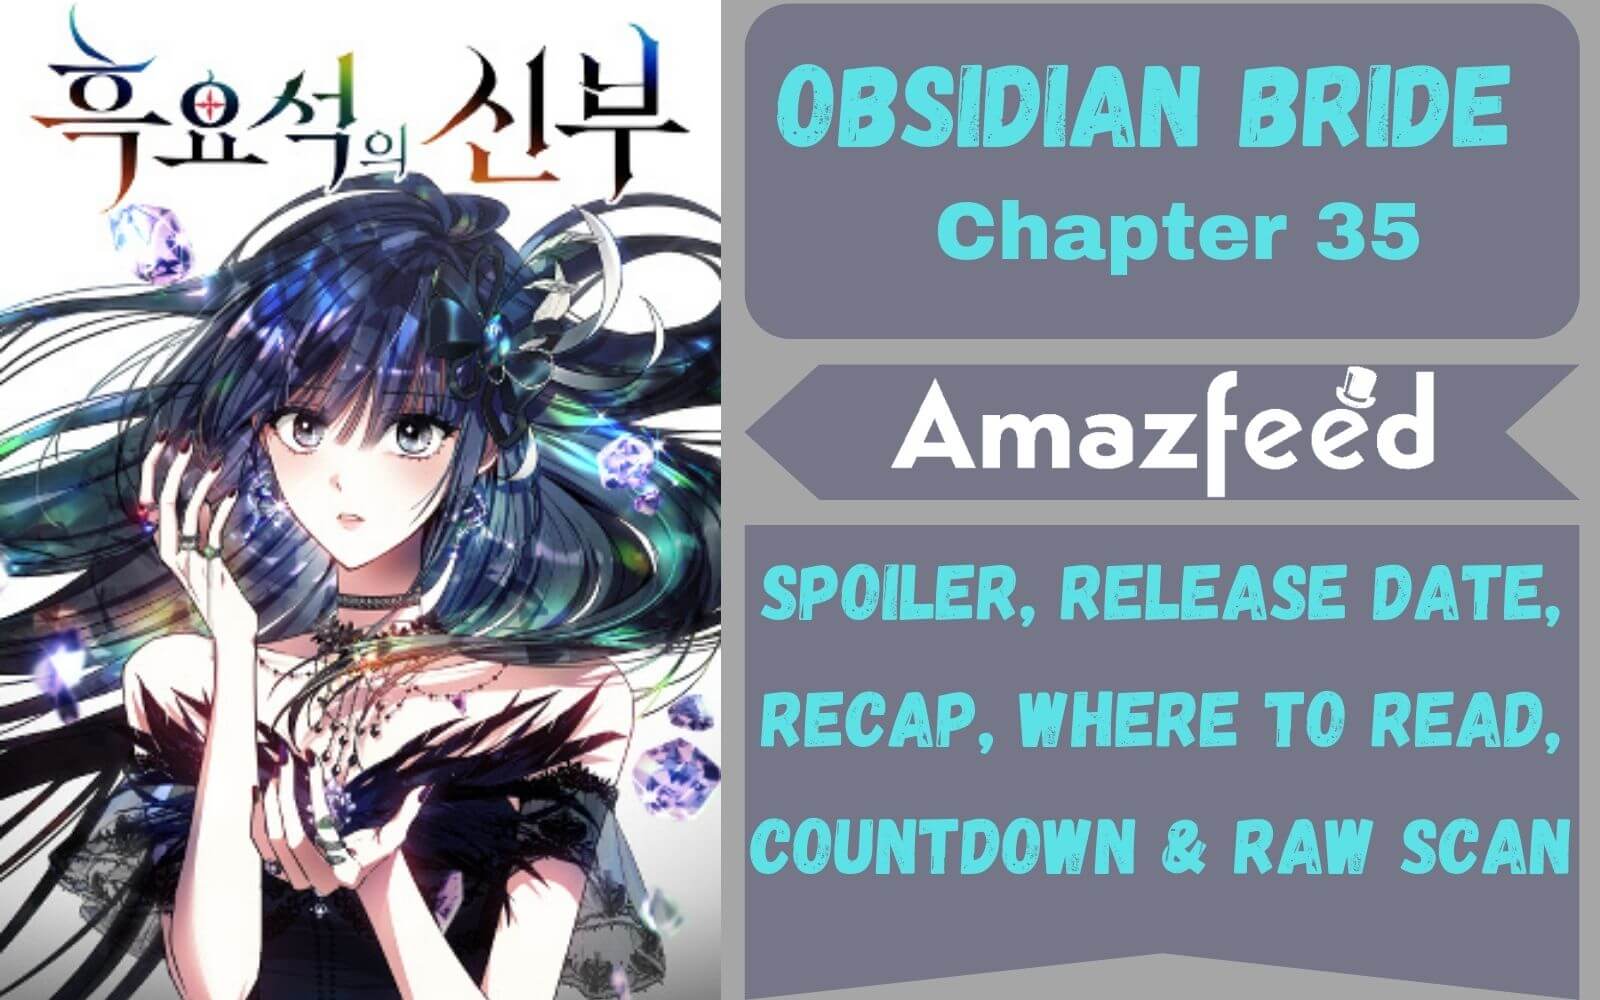 Obsidian Bride Chapter 35 Spoiler, Release Date, Recap, Countdown & Raw Scan